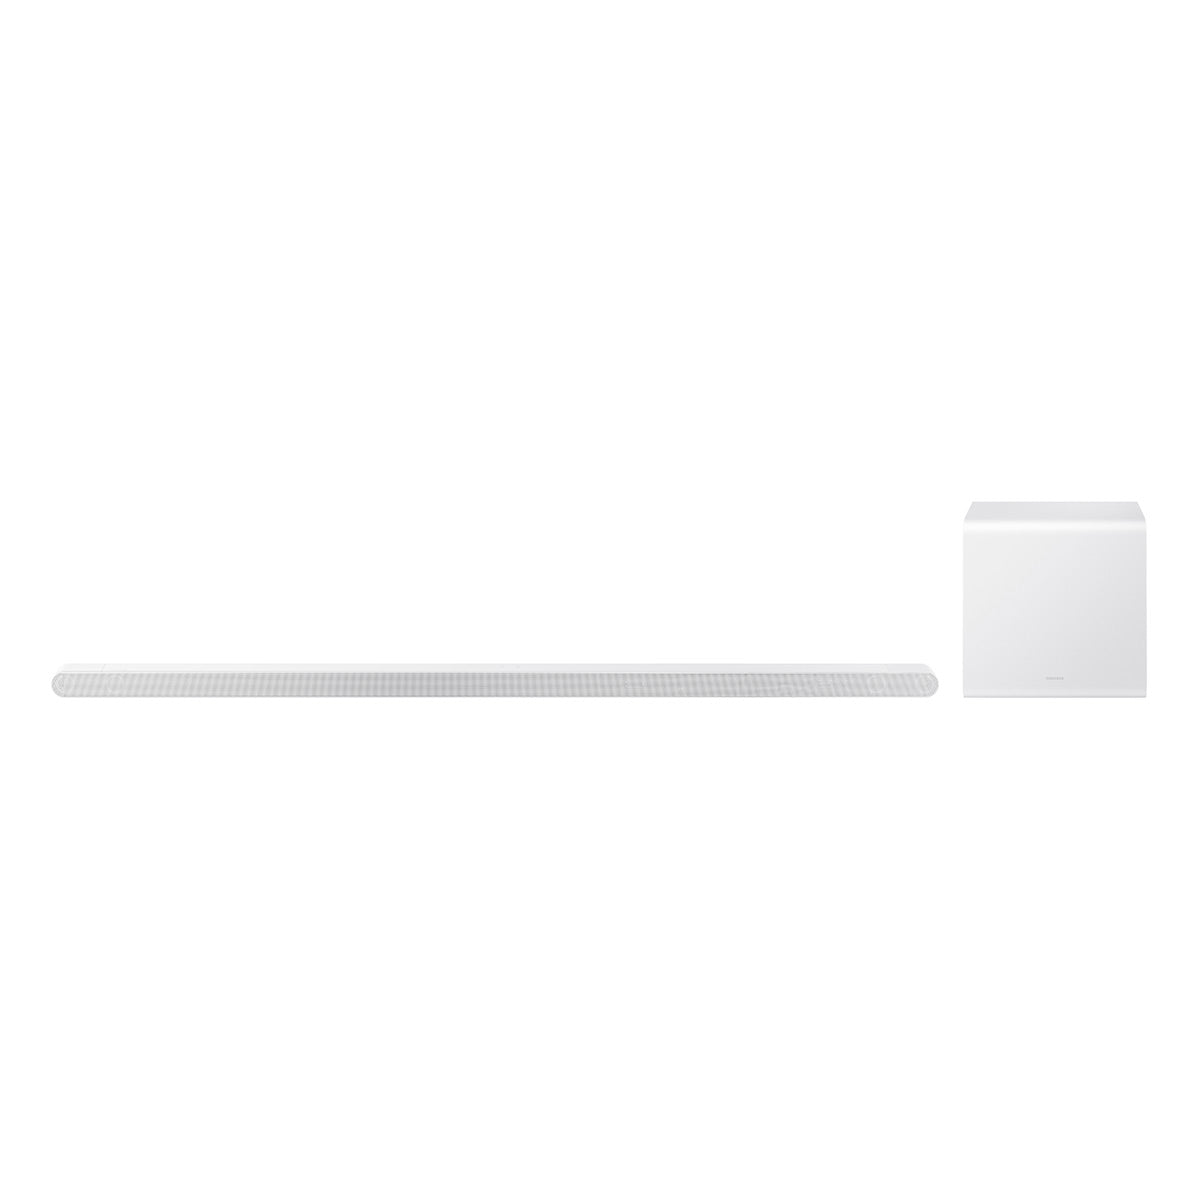 Samsung HW-S801D 3.1.2-Channel Soundbar with Wireless Subwoofer (White)